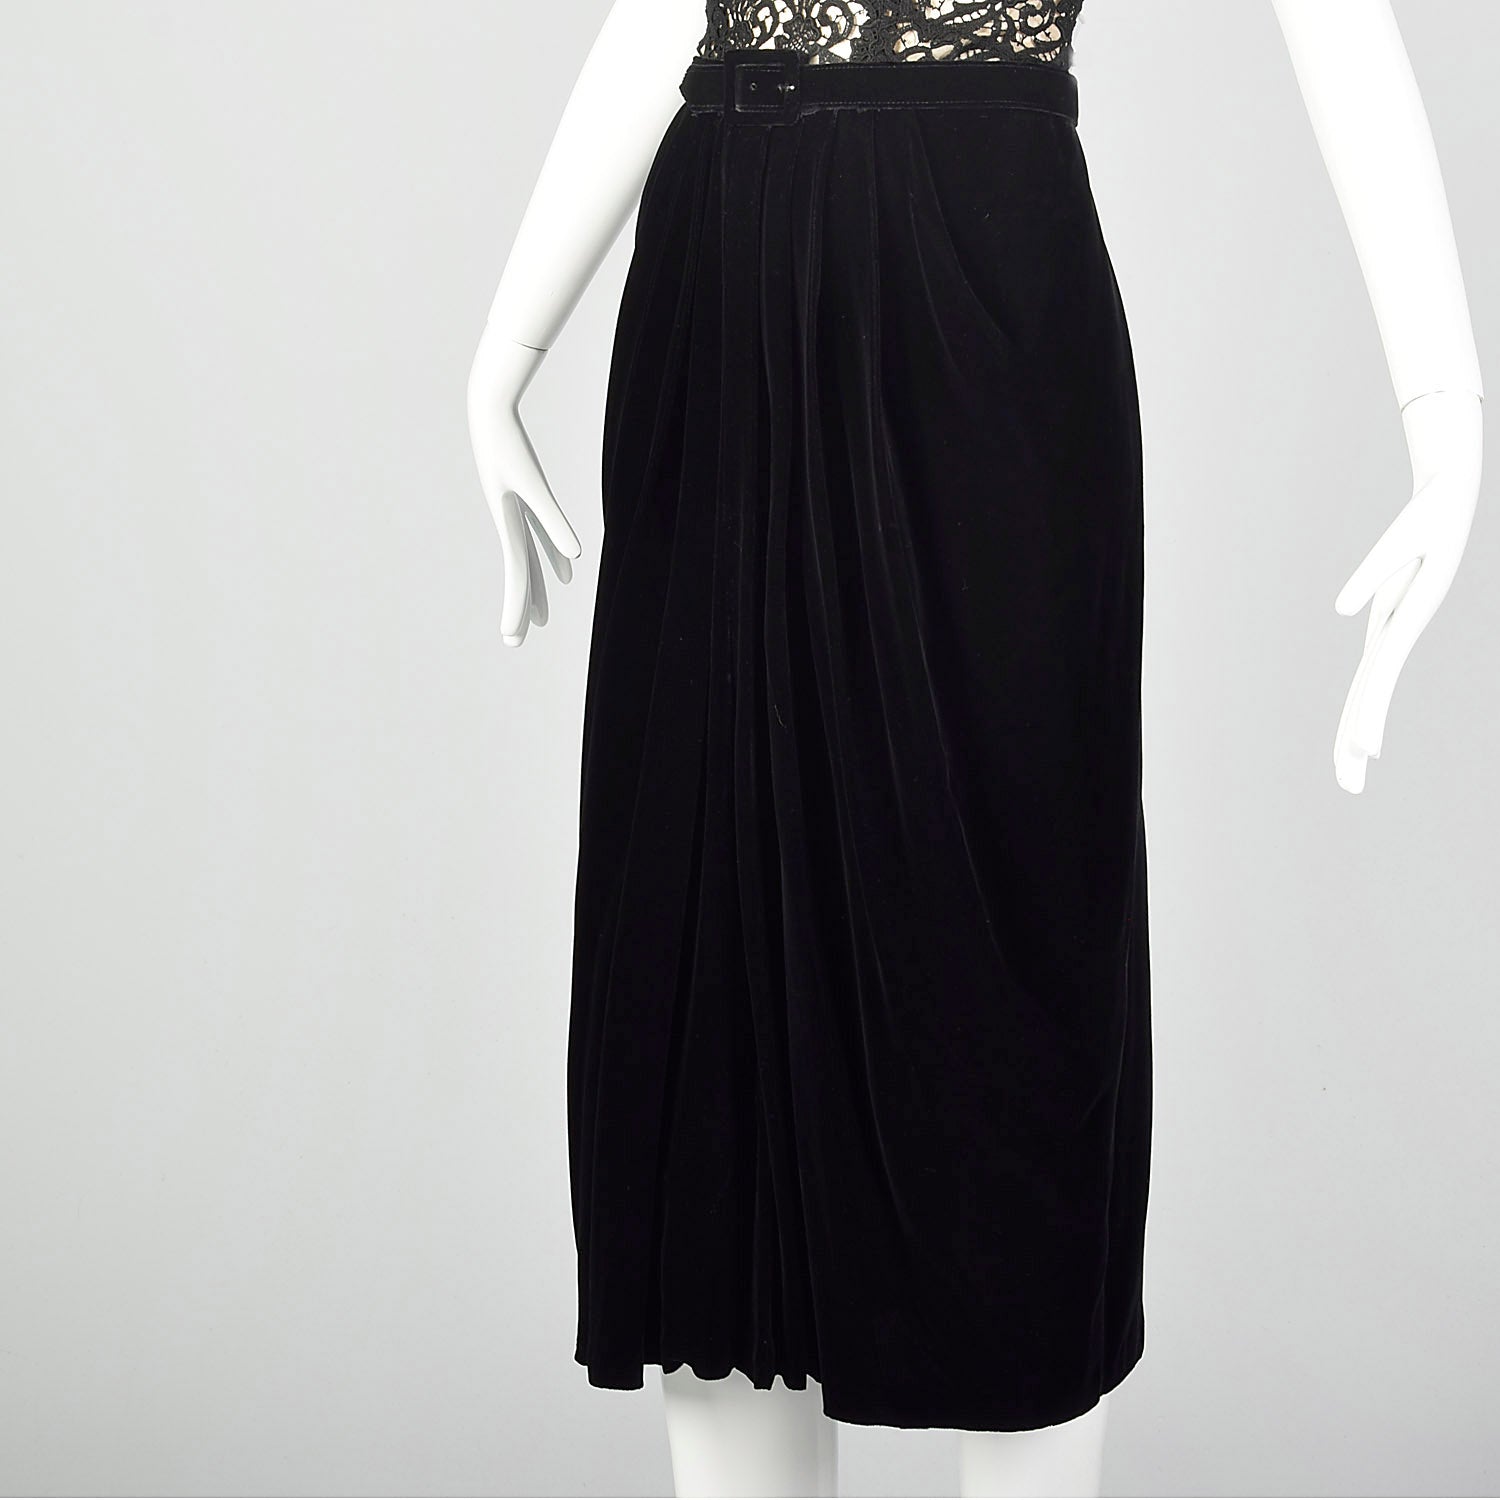 Small 1940s Illusion Bodice Evening Dress